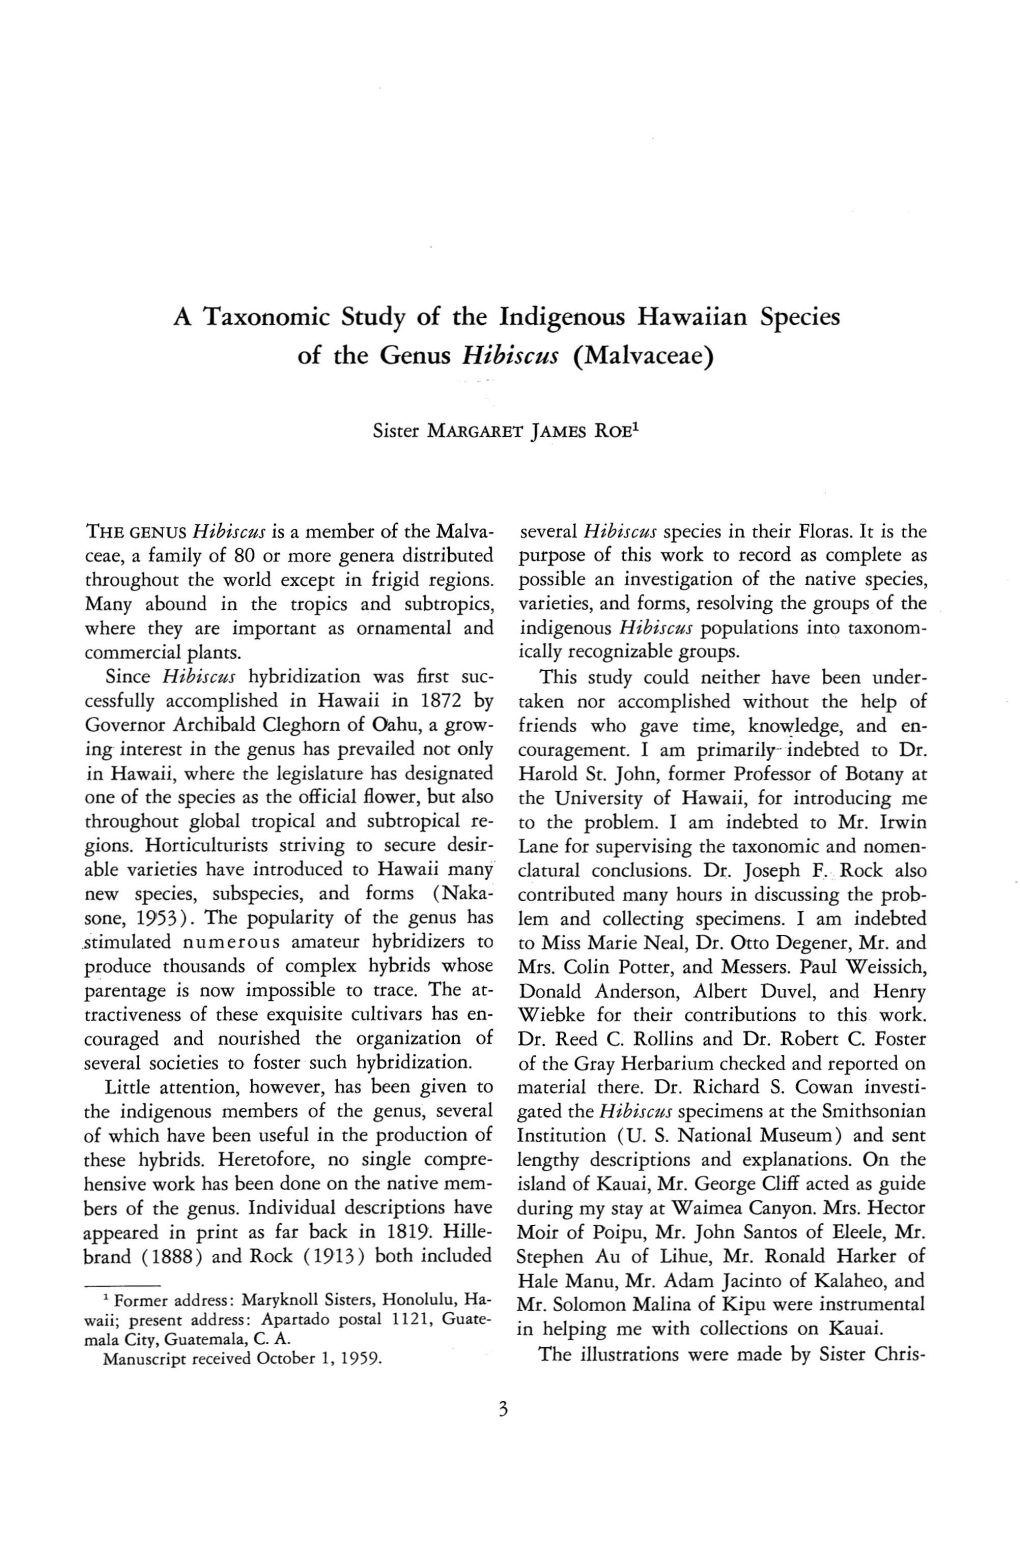 A Taxonomic Study of the Indigenous Hawaiian Species of the Genus Hibiscus (Malvaceae)